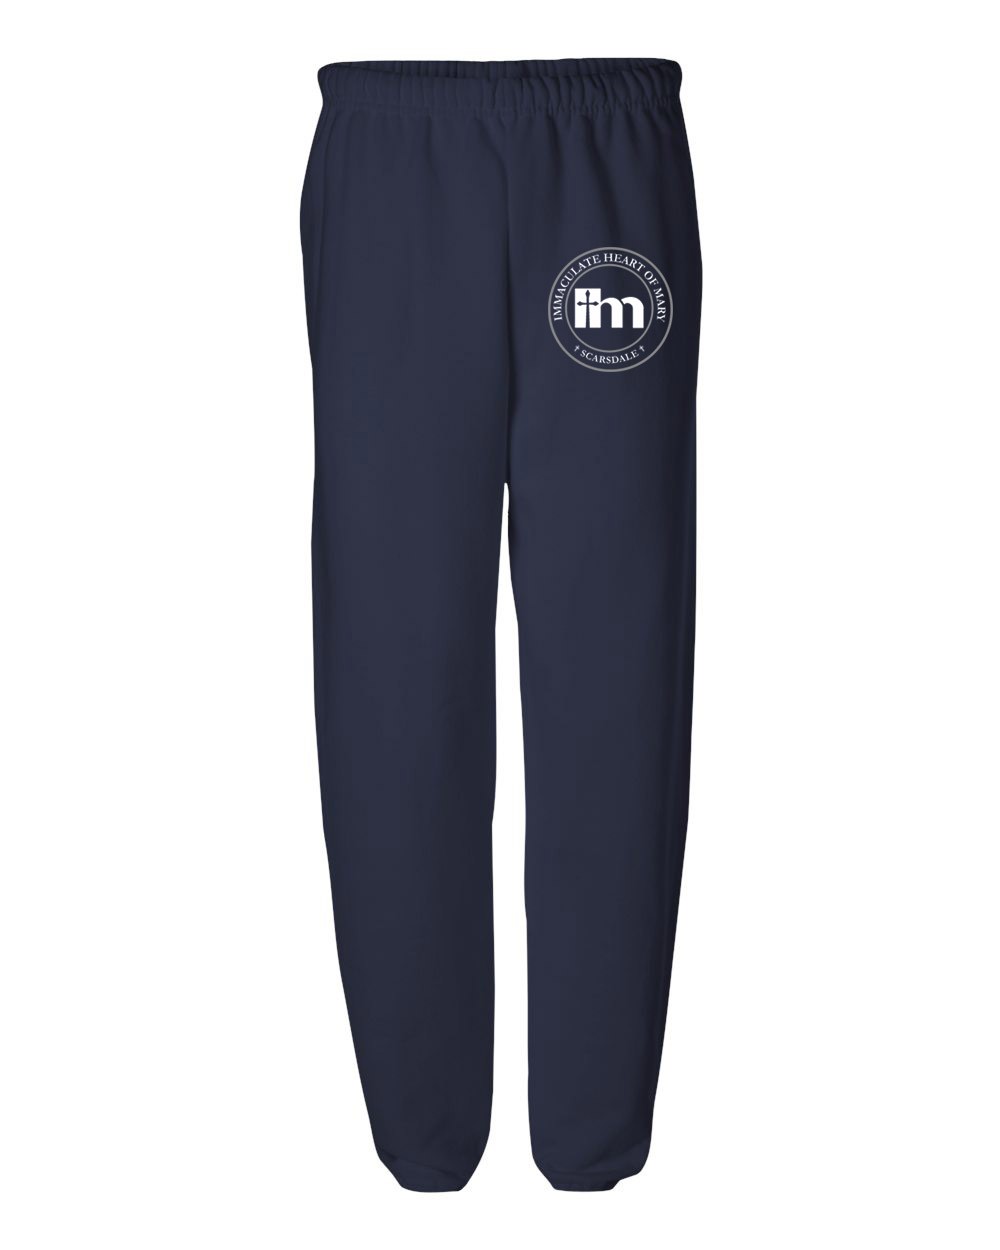 IHM Gym Sweatpants w/ School Logo